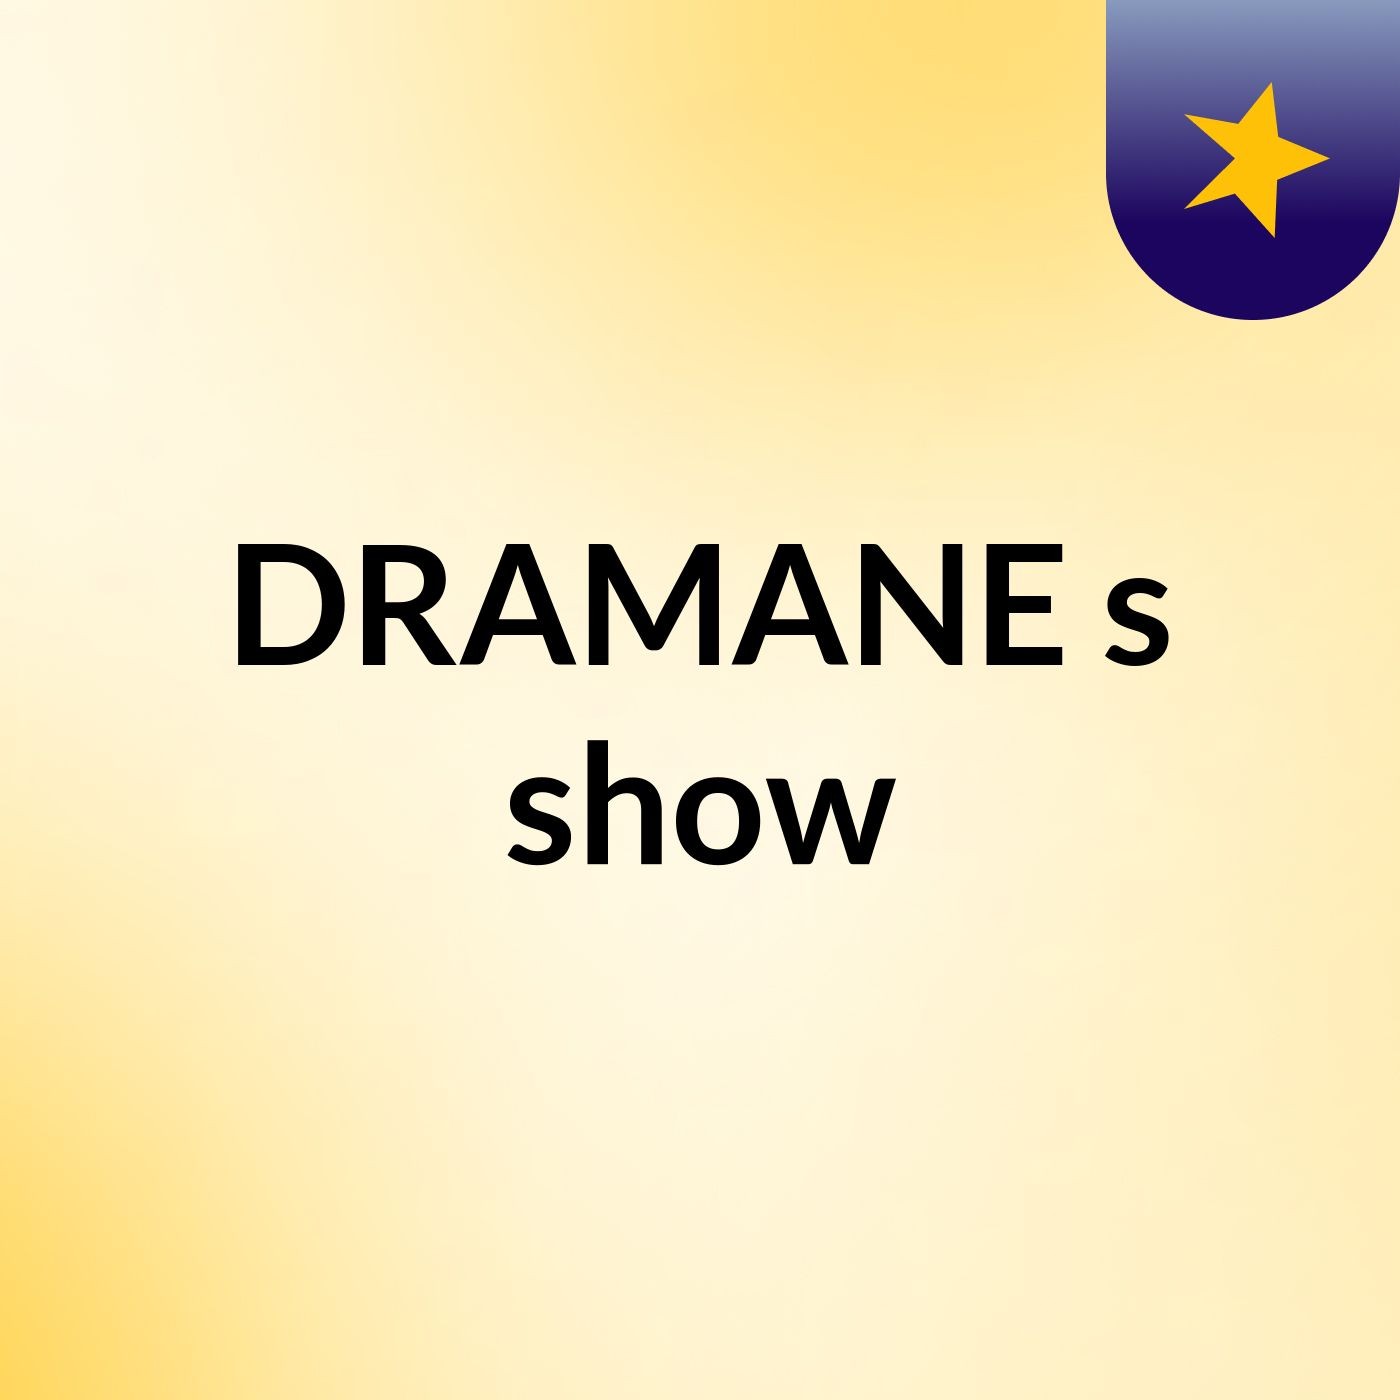 DRAMANE's show